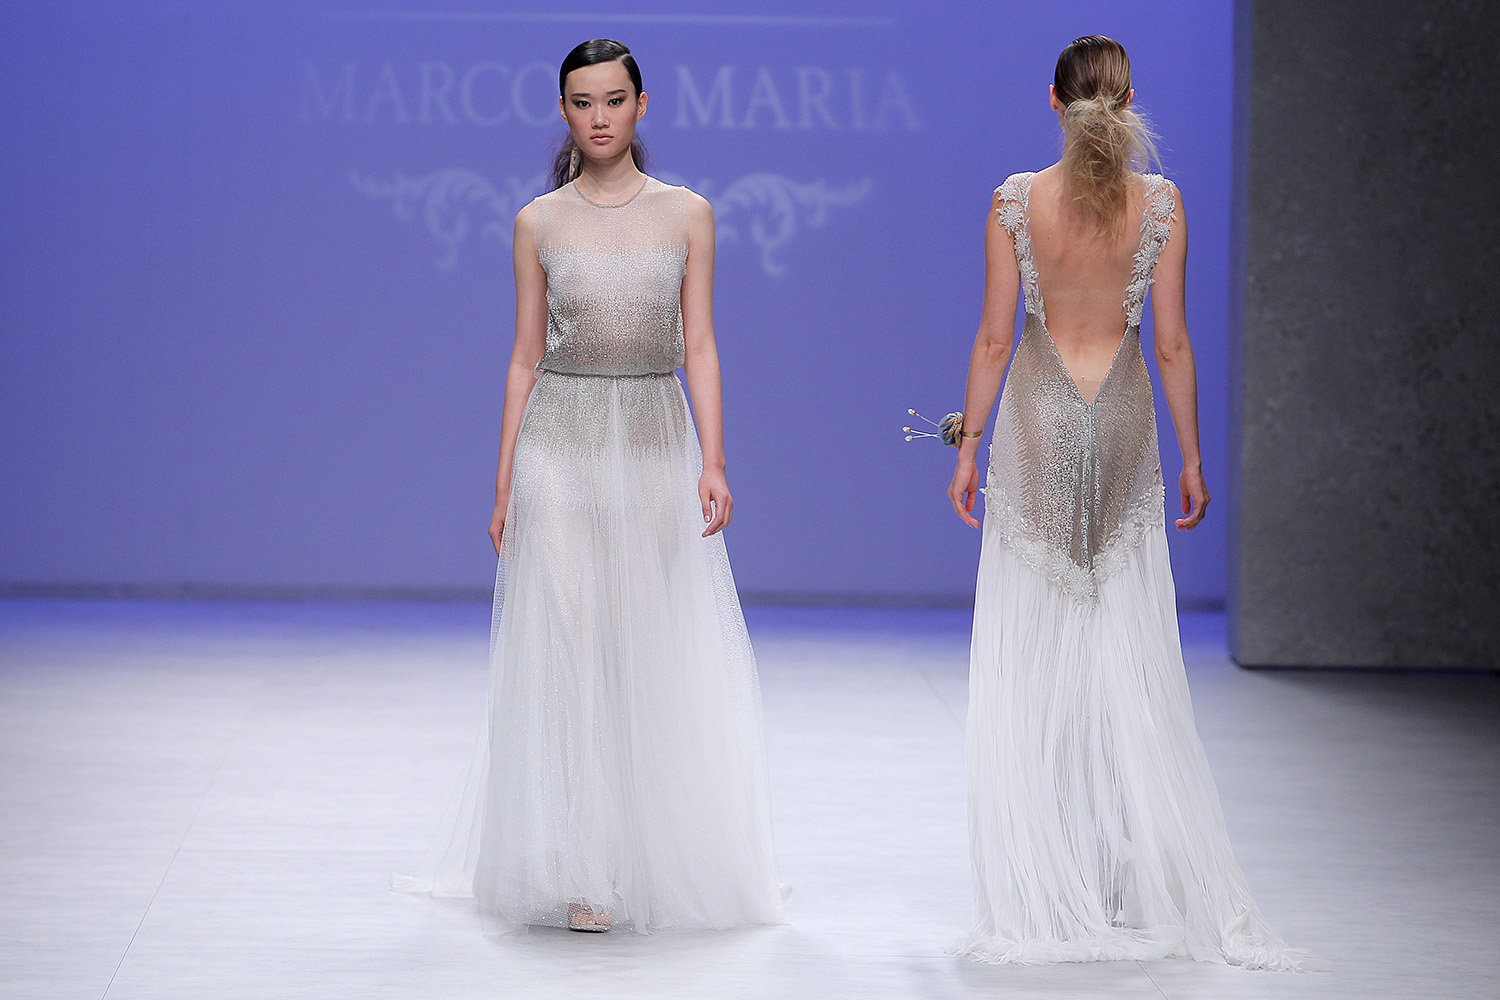 Créditos: Marco &amp; Maria | Barcelona Bridal Fashion Week